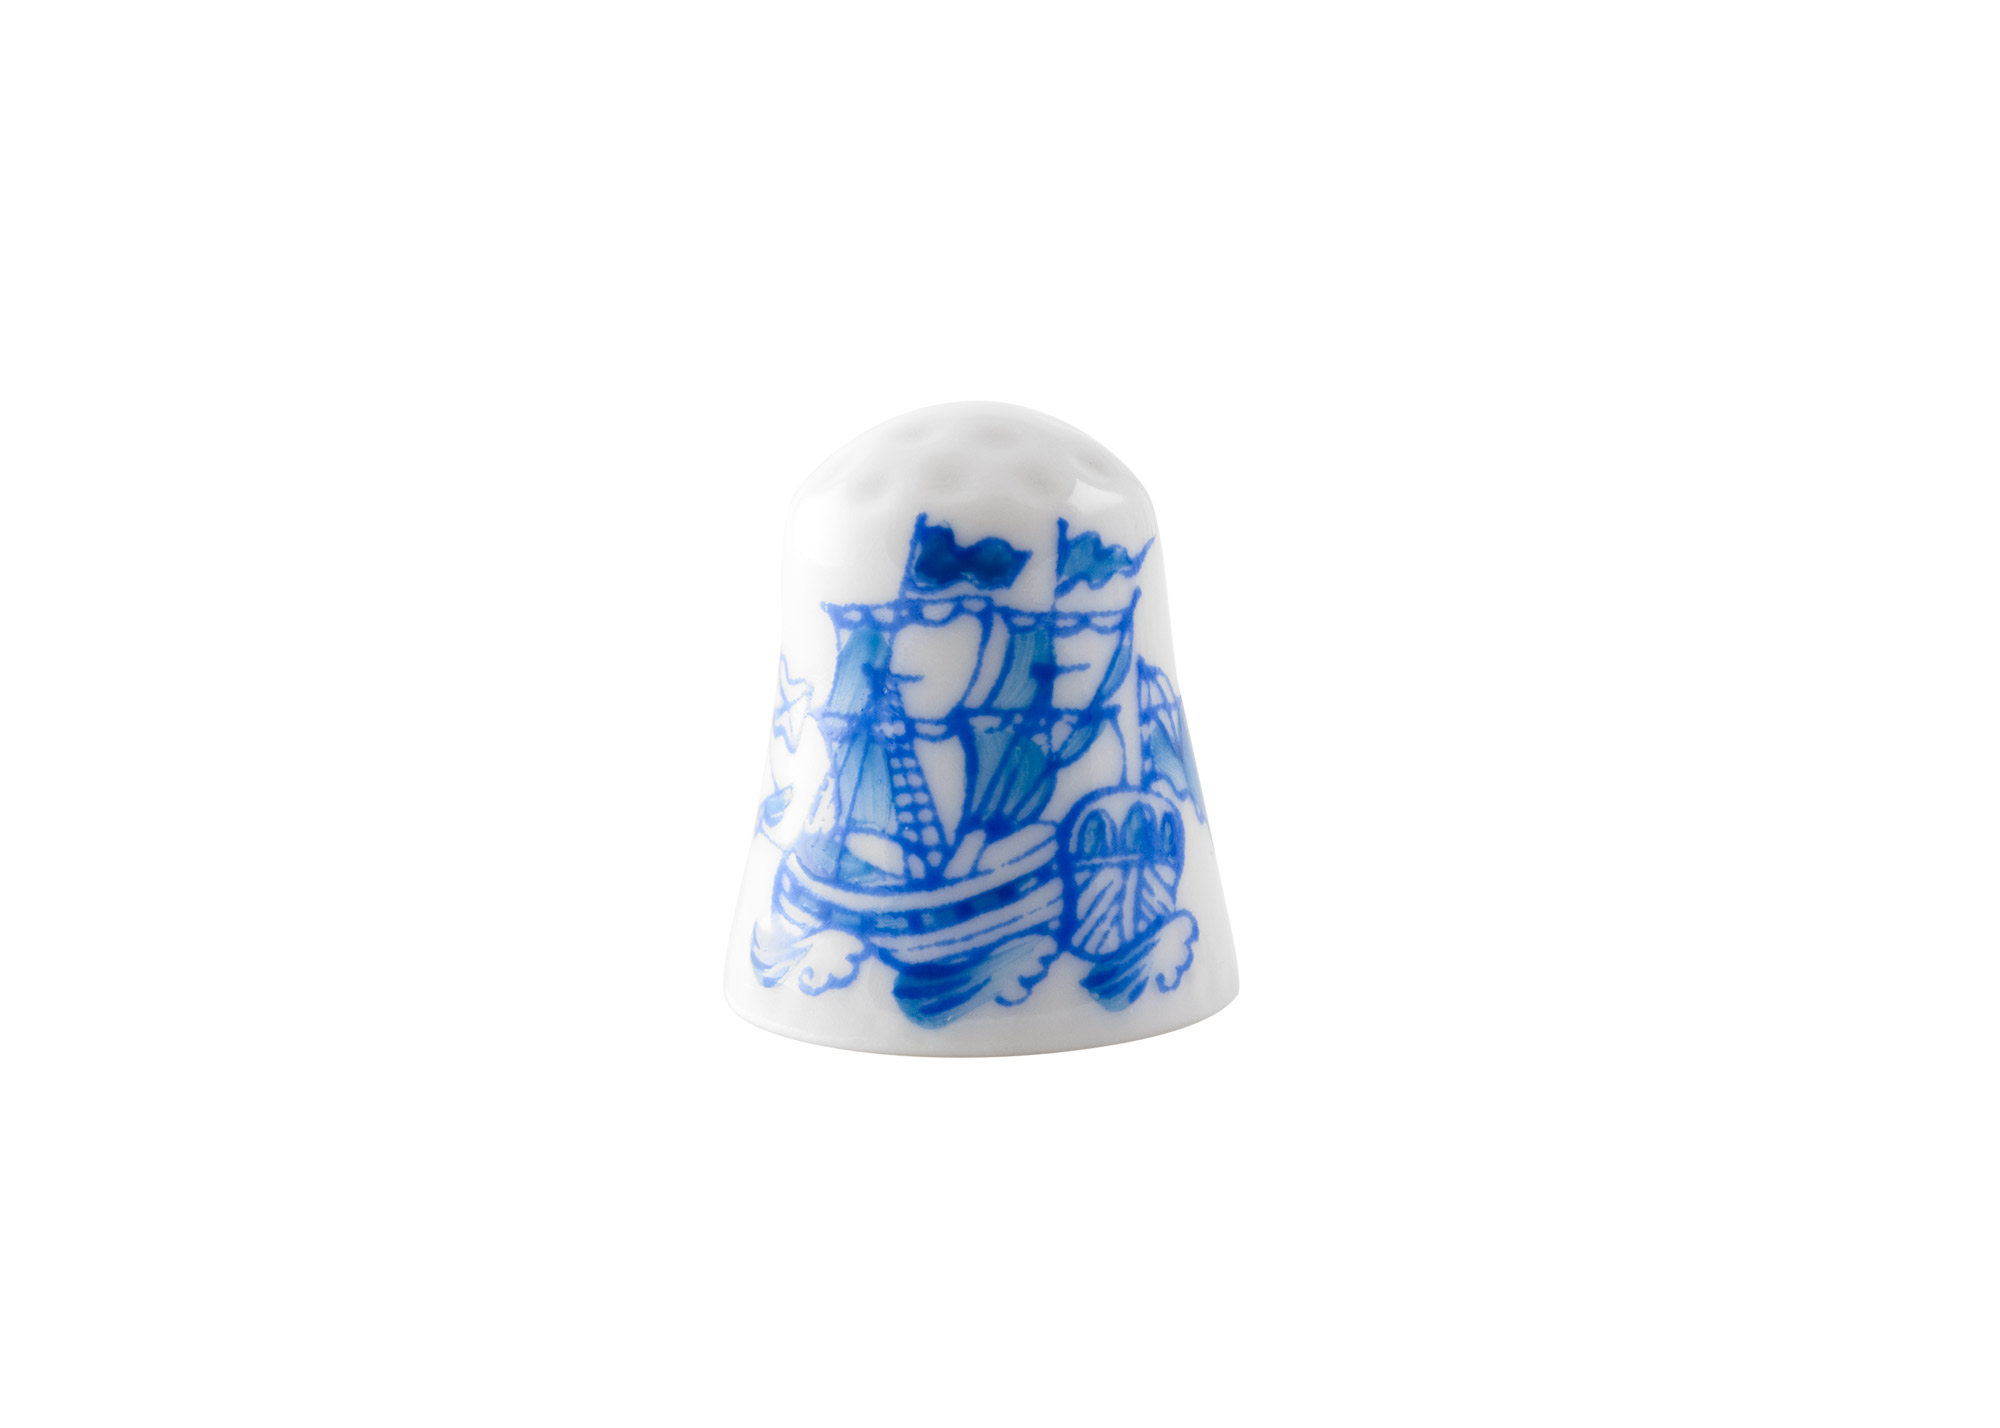 Buy Frigate Porcelain Thimble at GoldenCockerel.com